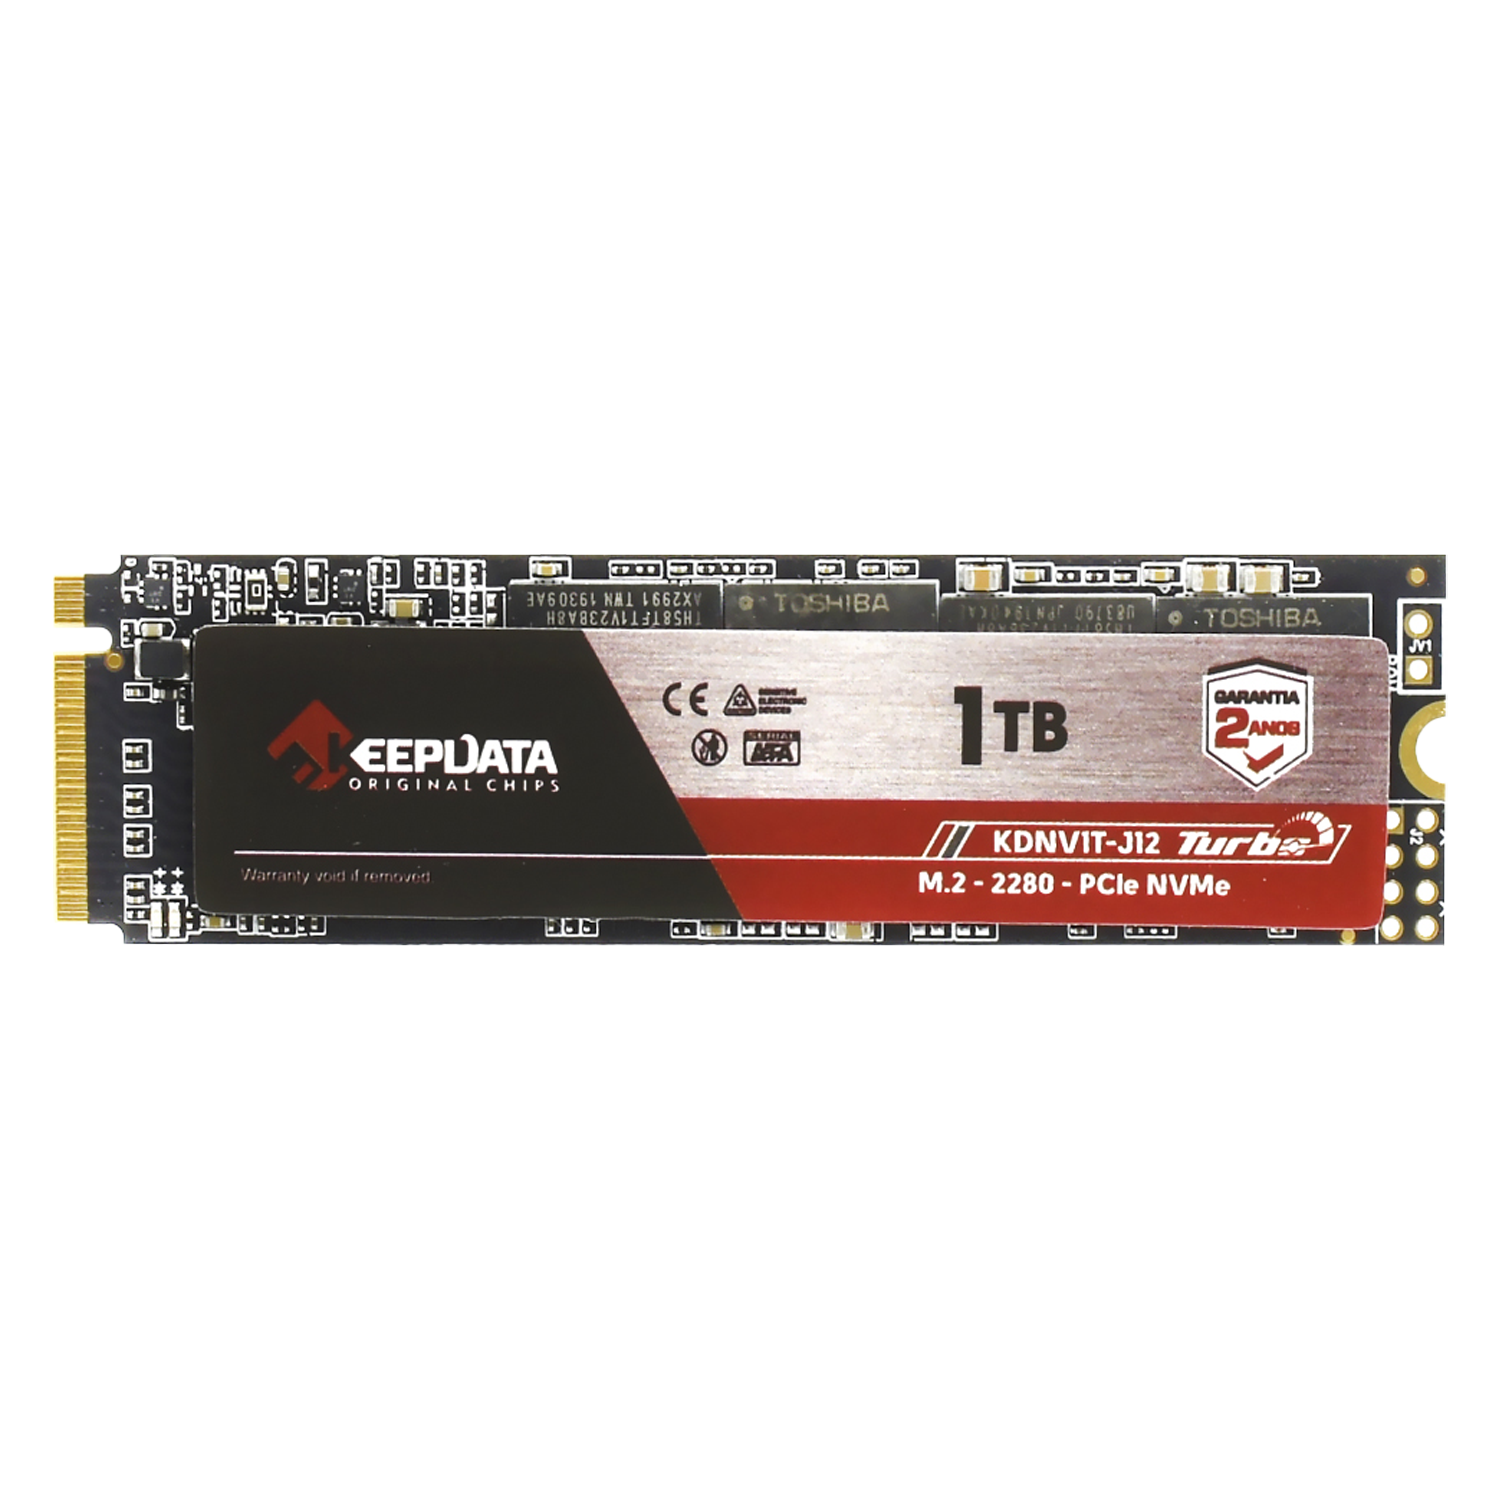 SSD M.2 Keepdata Turbo 1TB / NVMe PCIe Gen3 - (KDNV1T-J12)